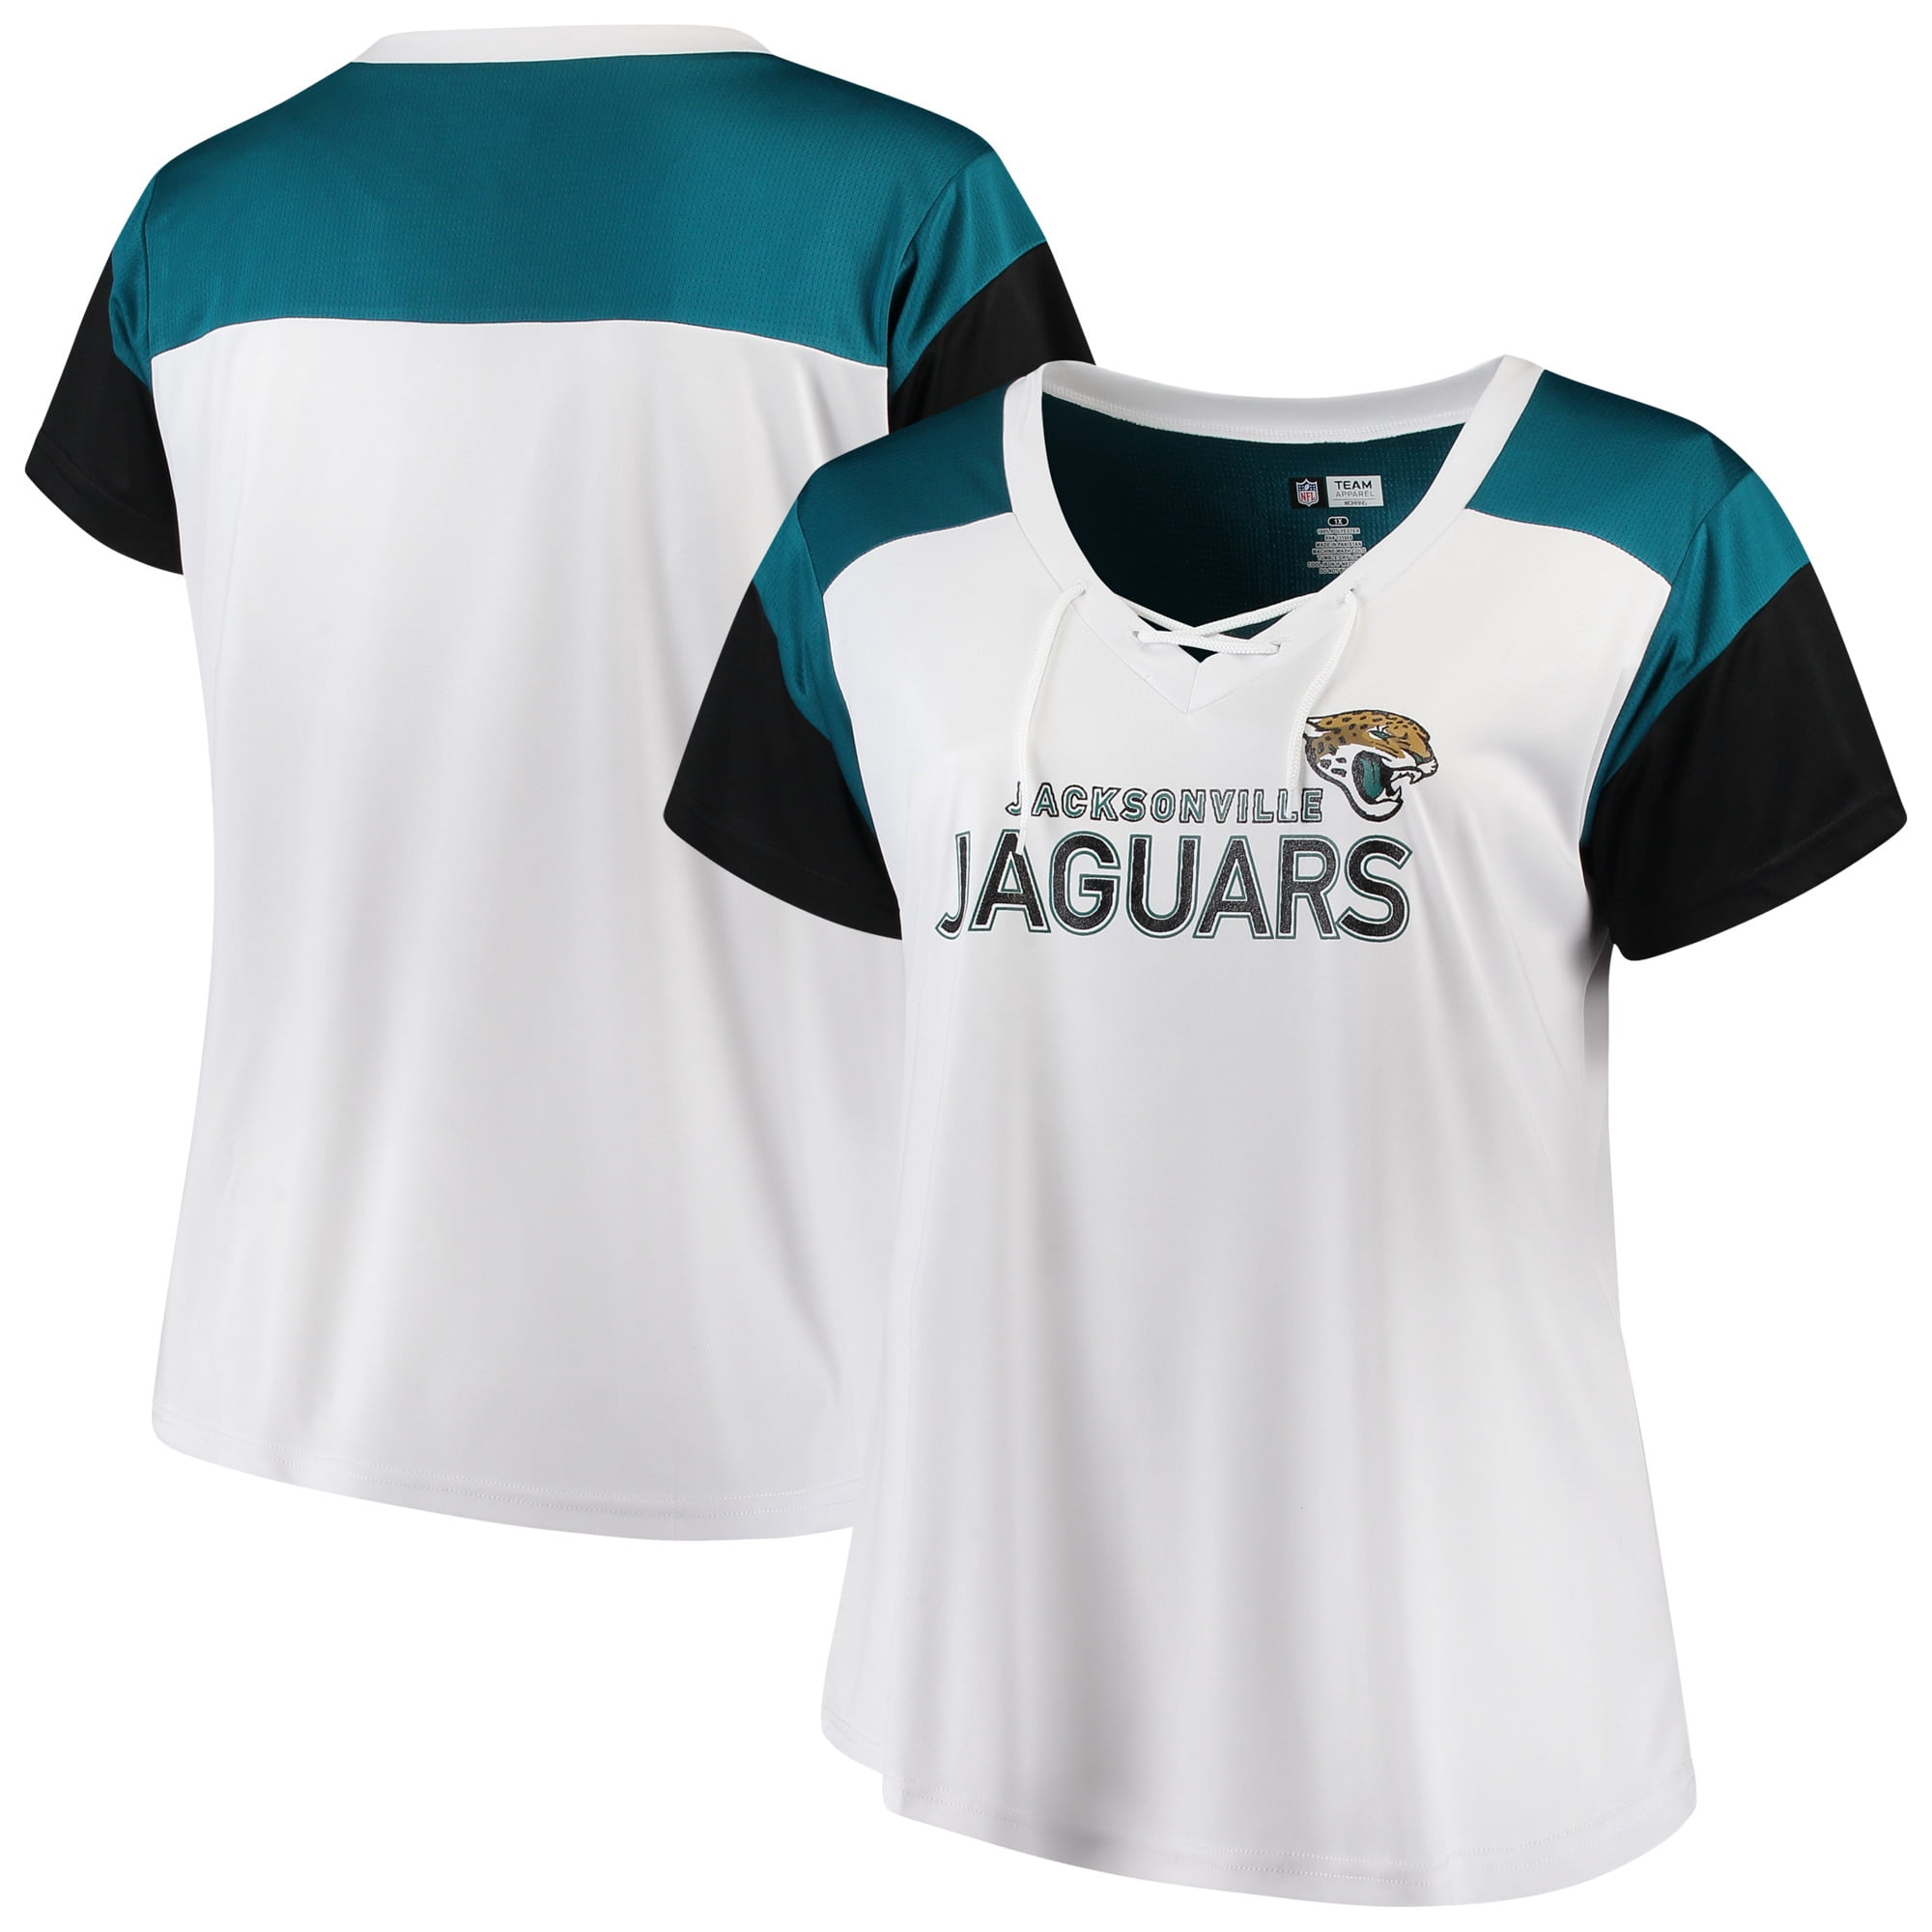 jaguars women's jersey